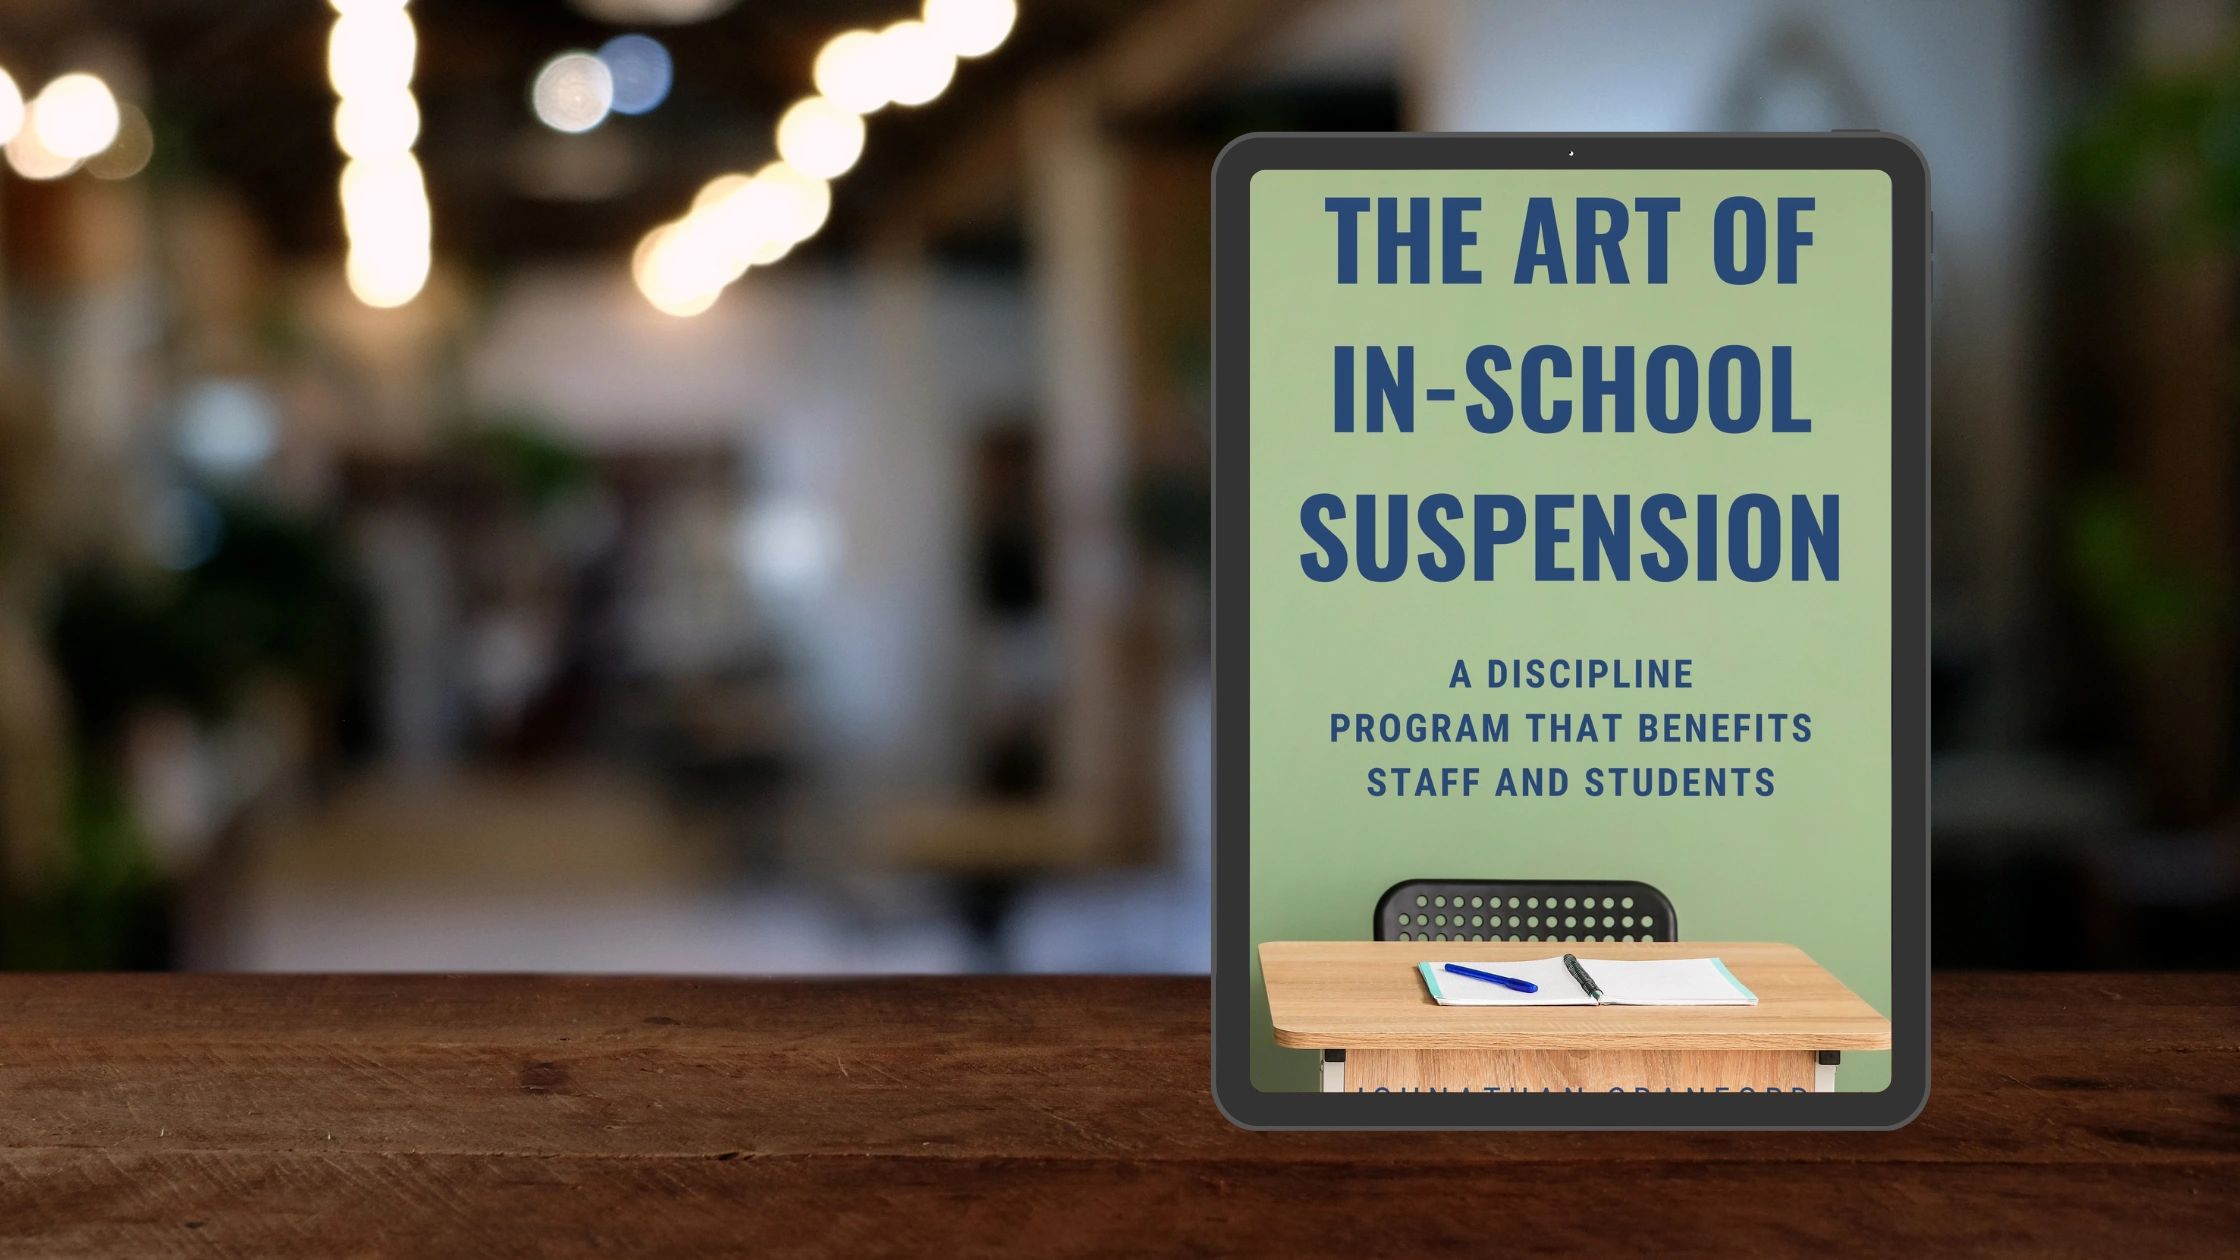 in school suspension